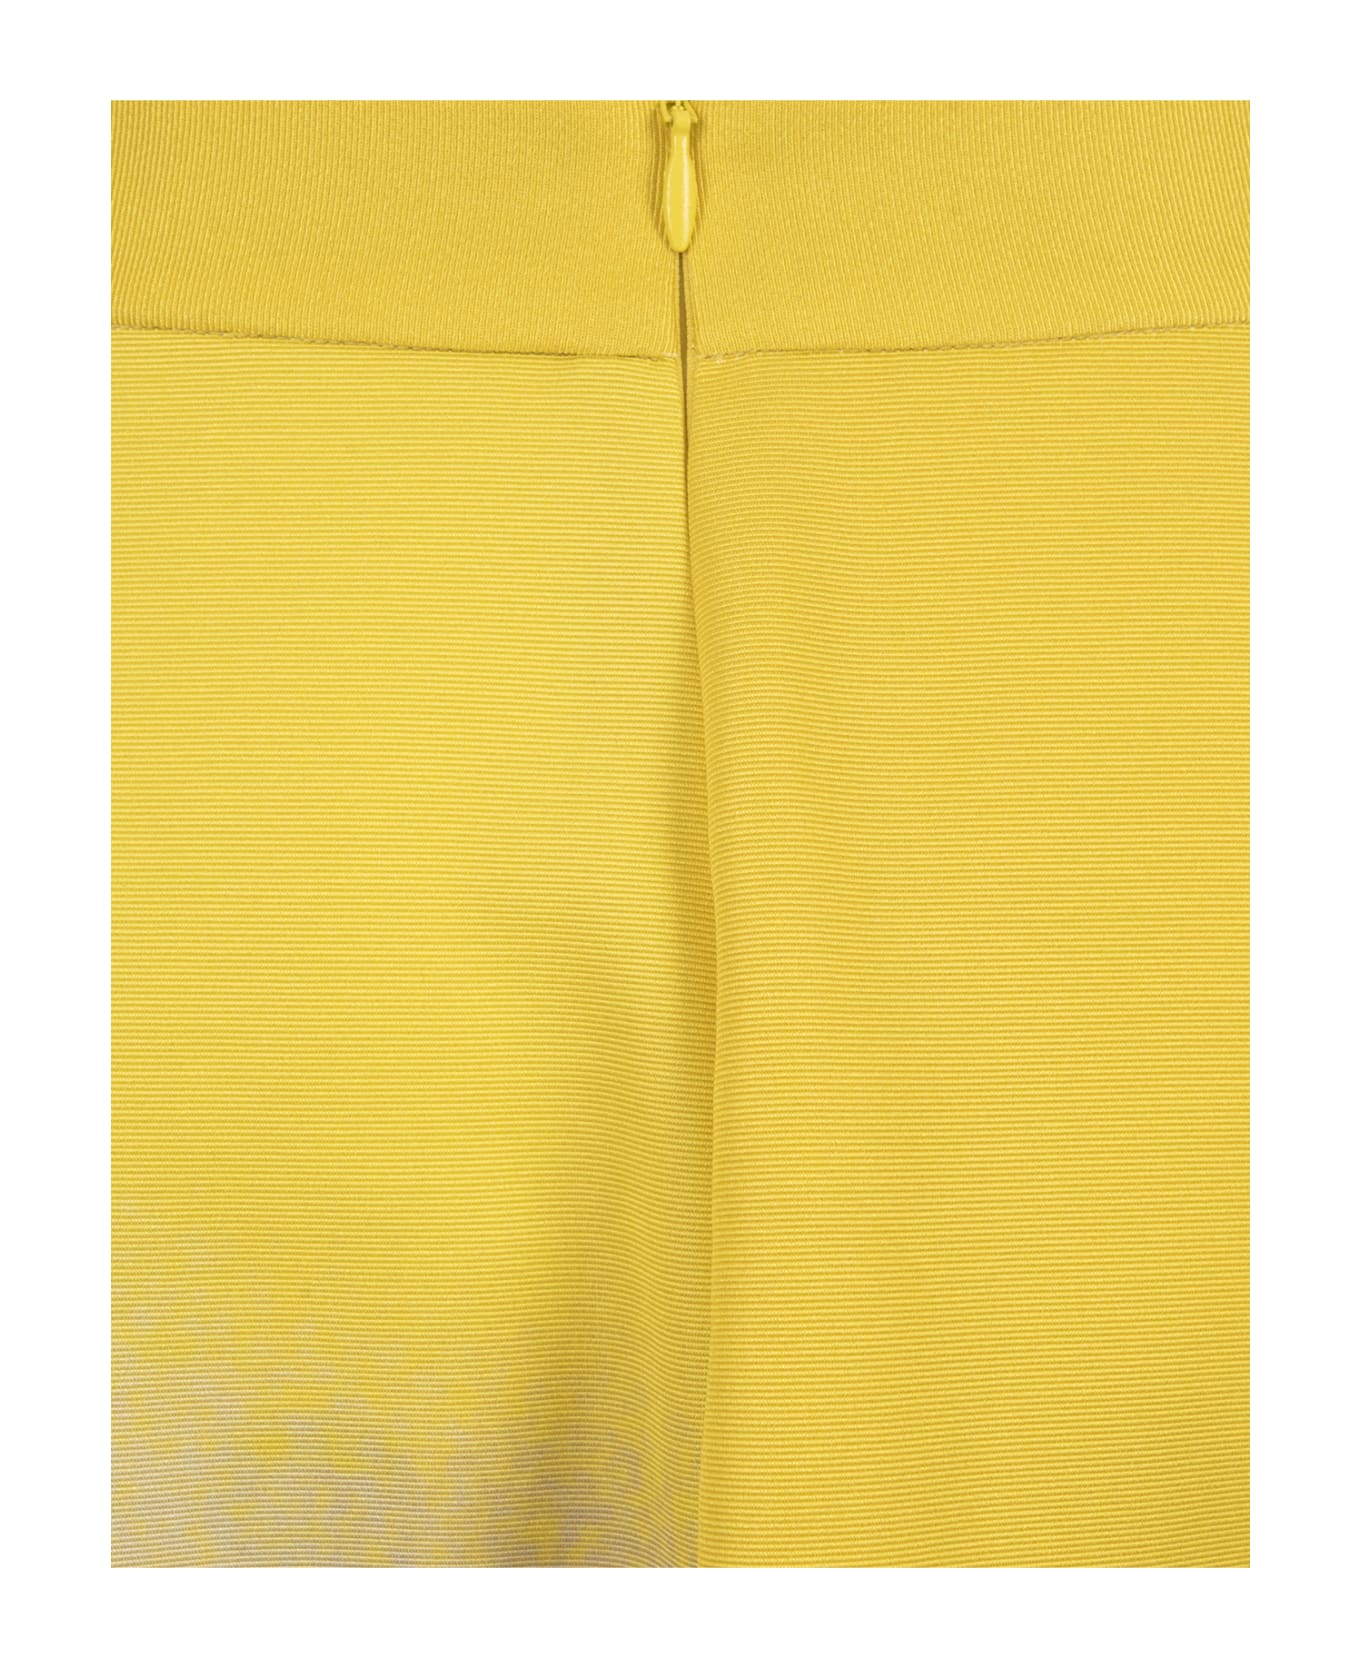 Gianluca Capannolo Printed Yellow Silk Midi Skirt - Yellow スカート